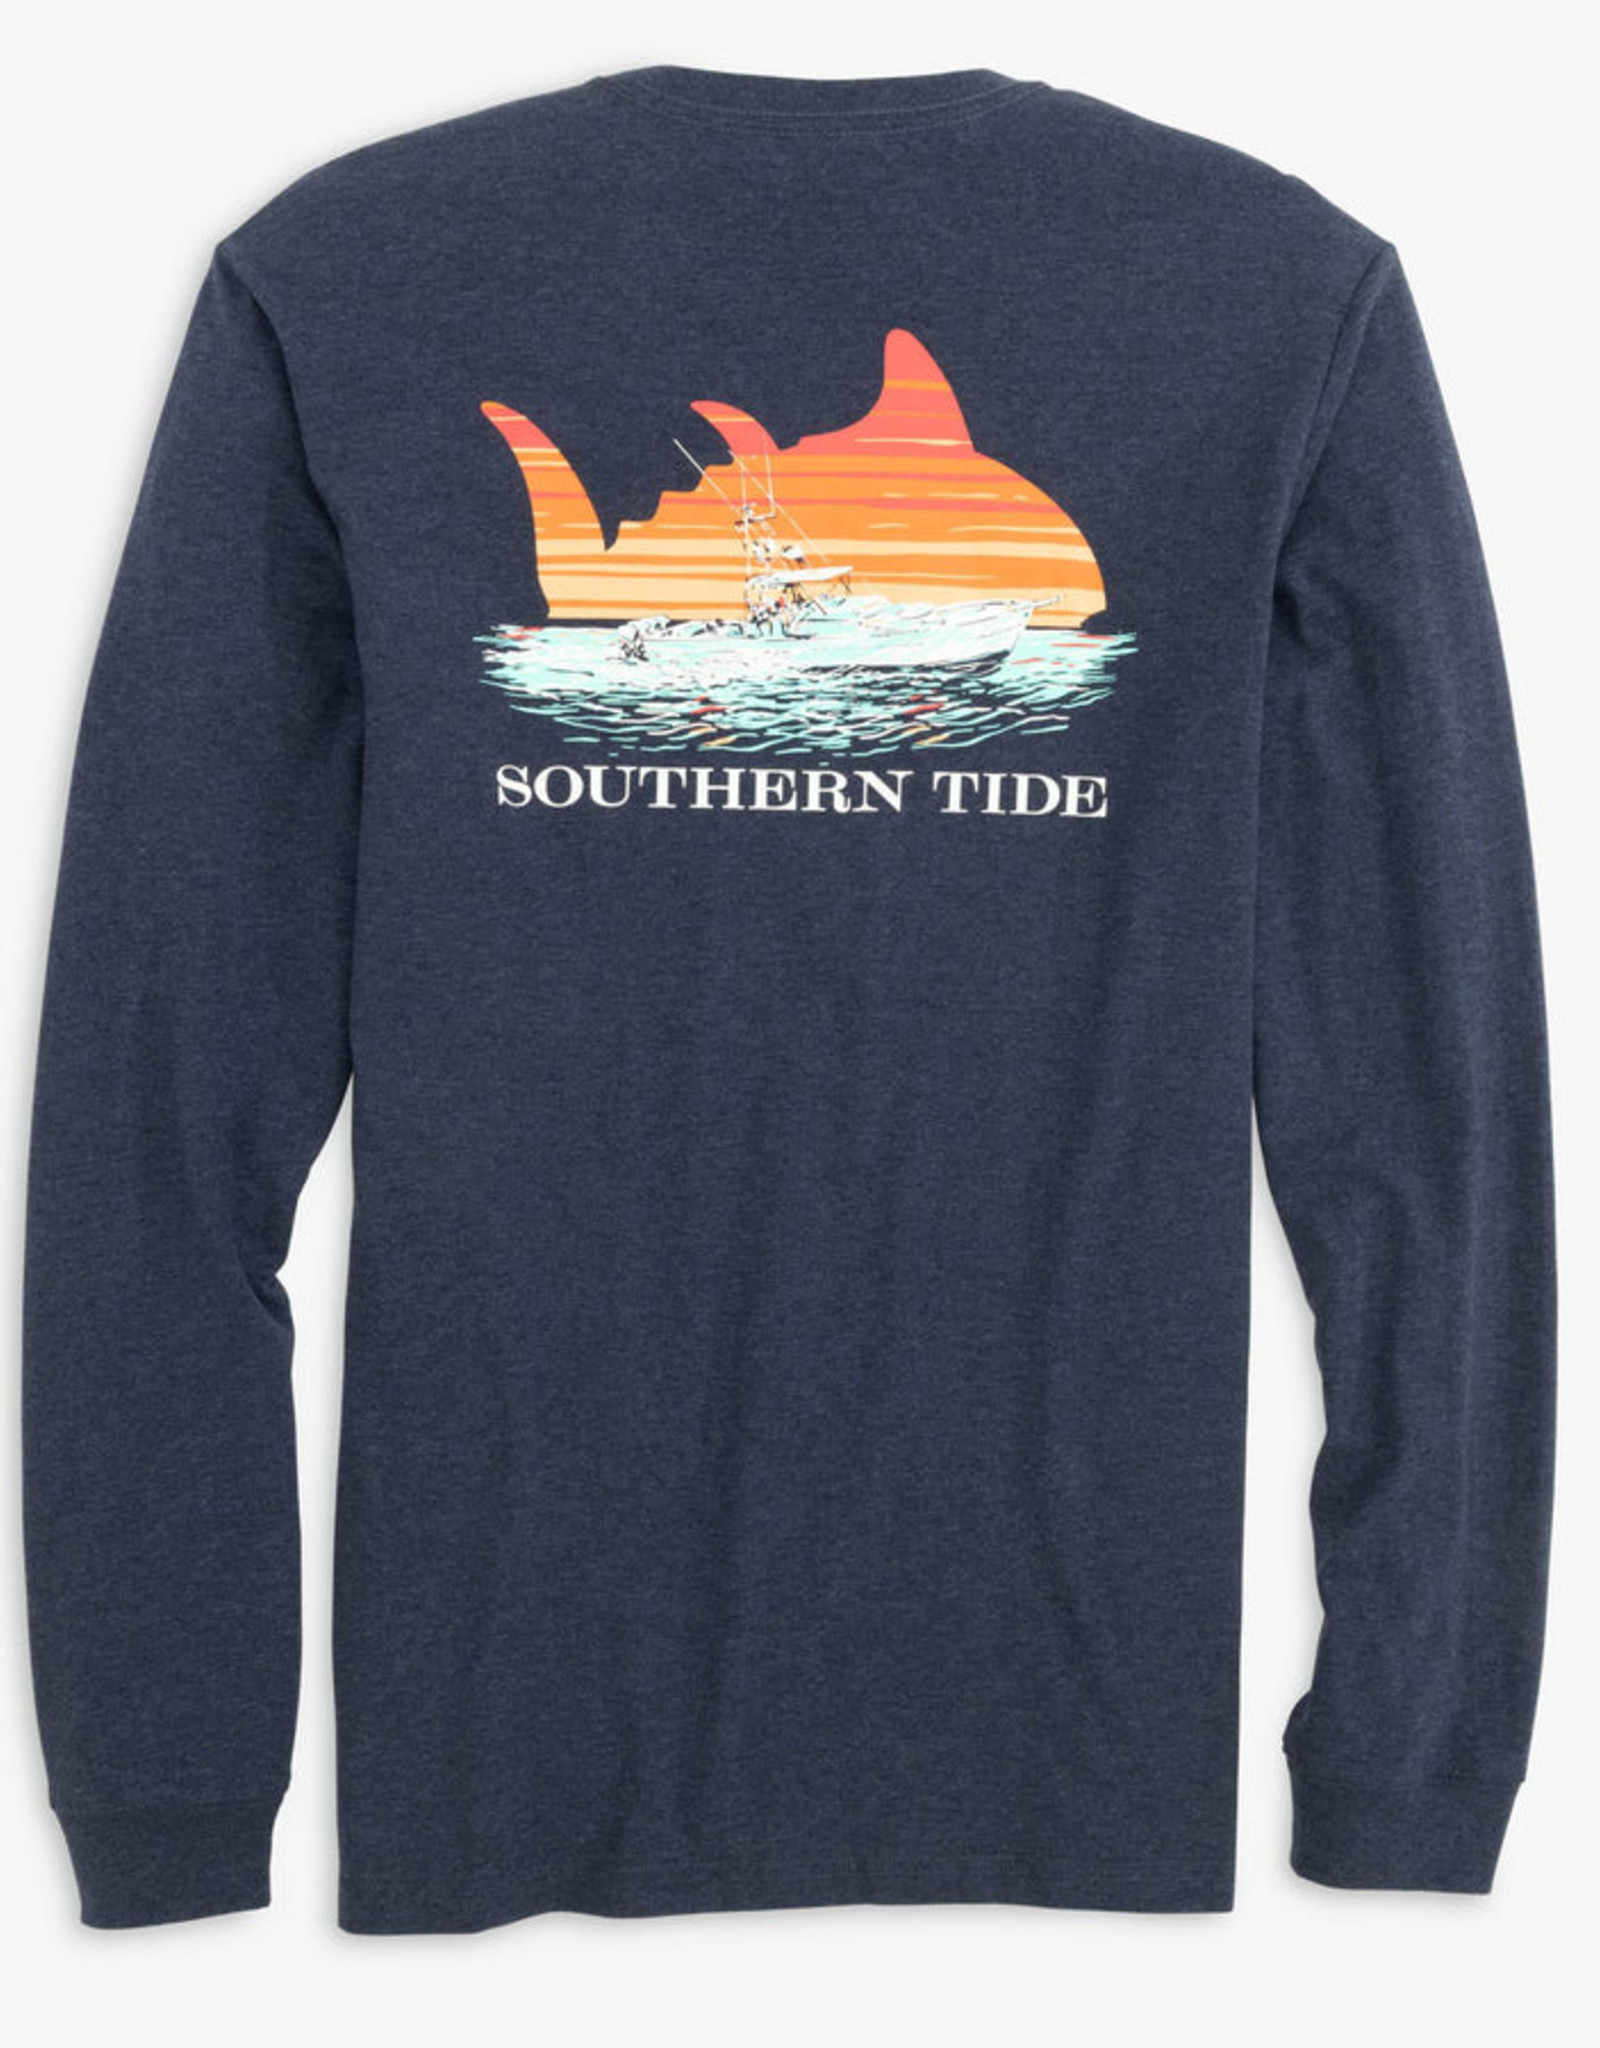 Southern Tide Speedboat Sunset Tee